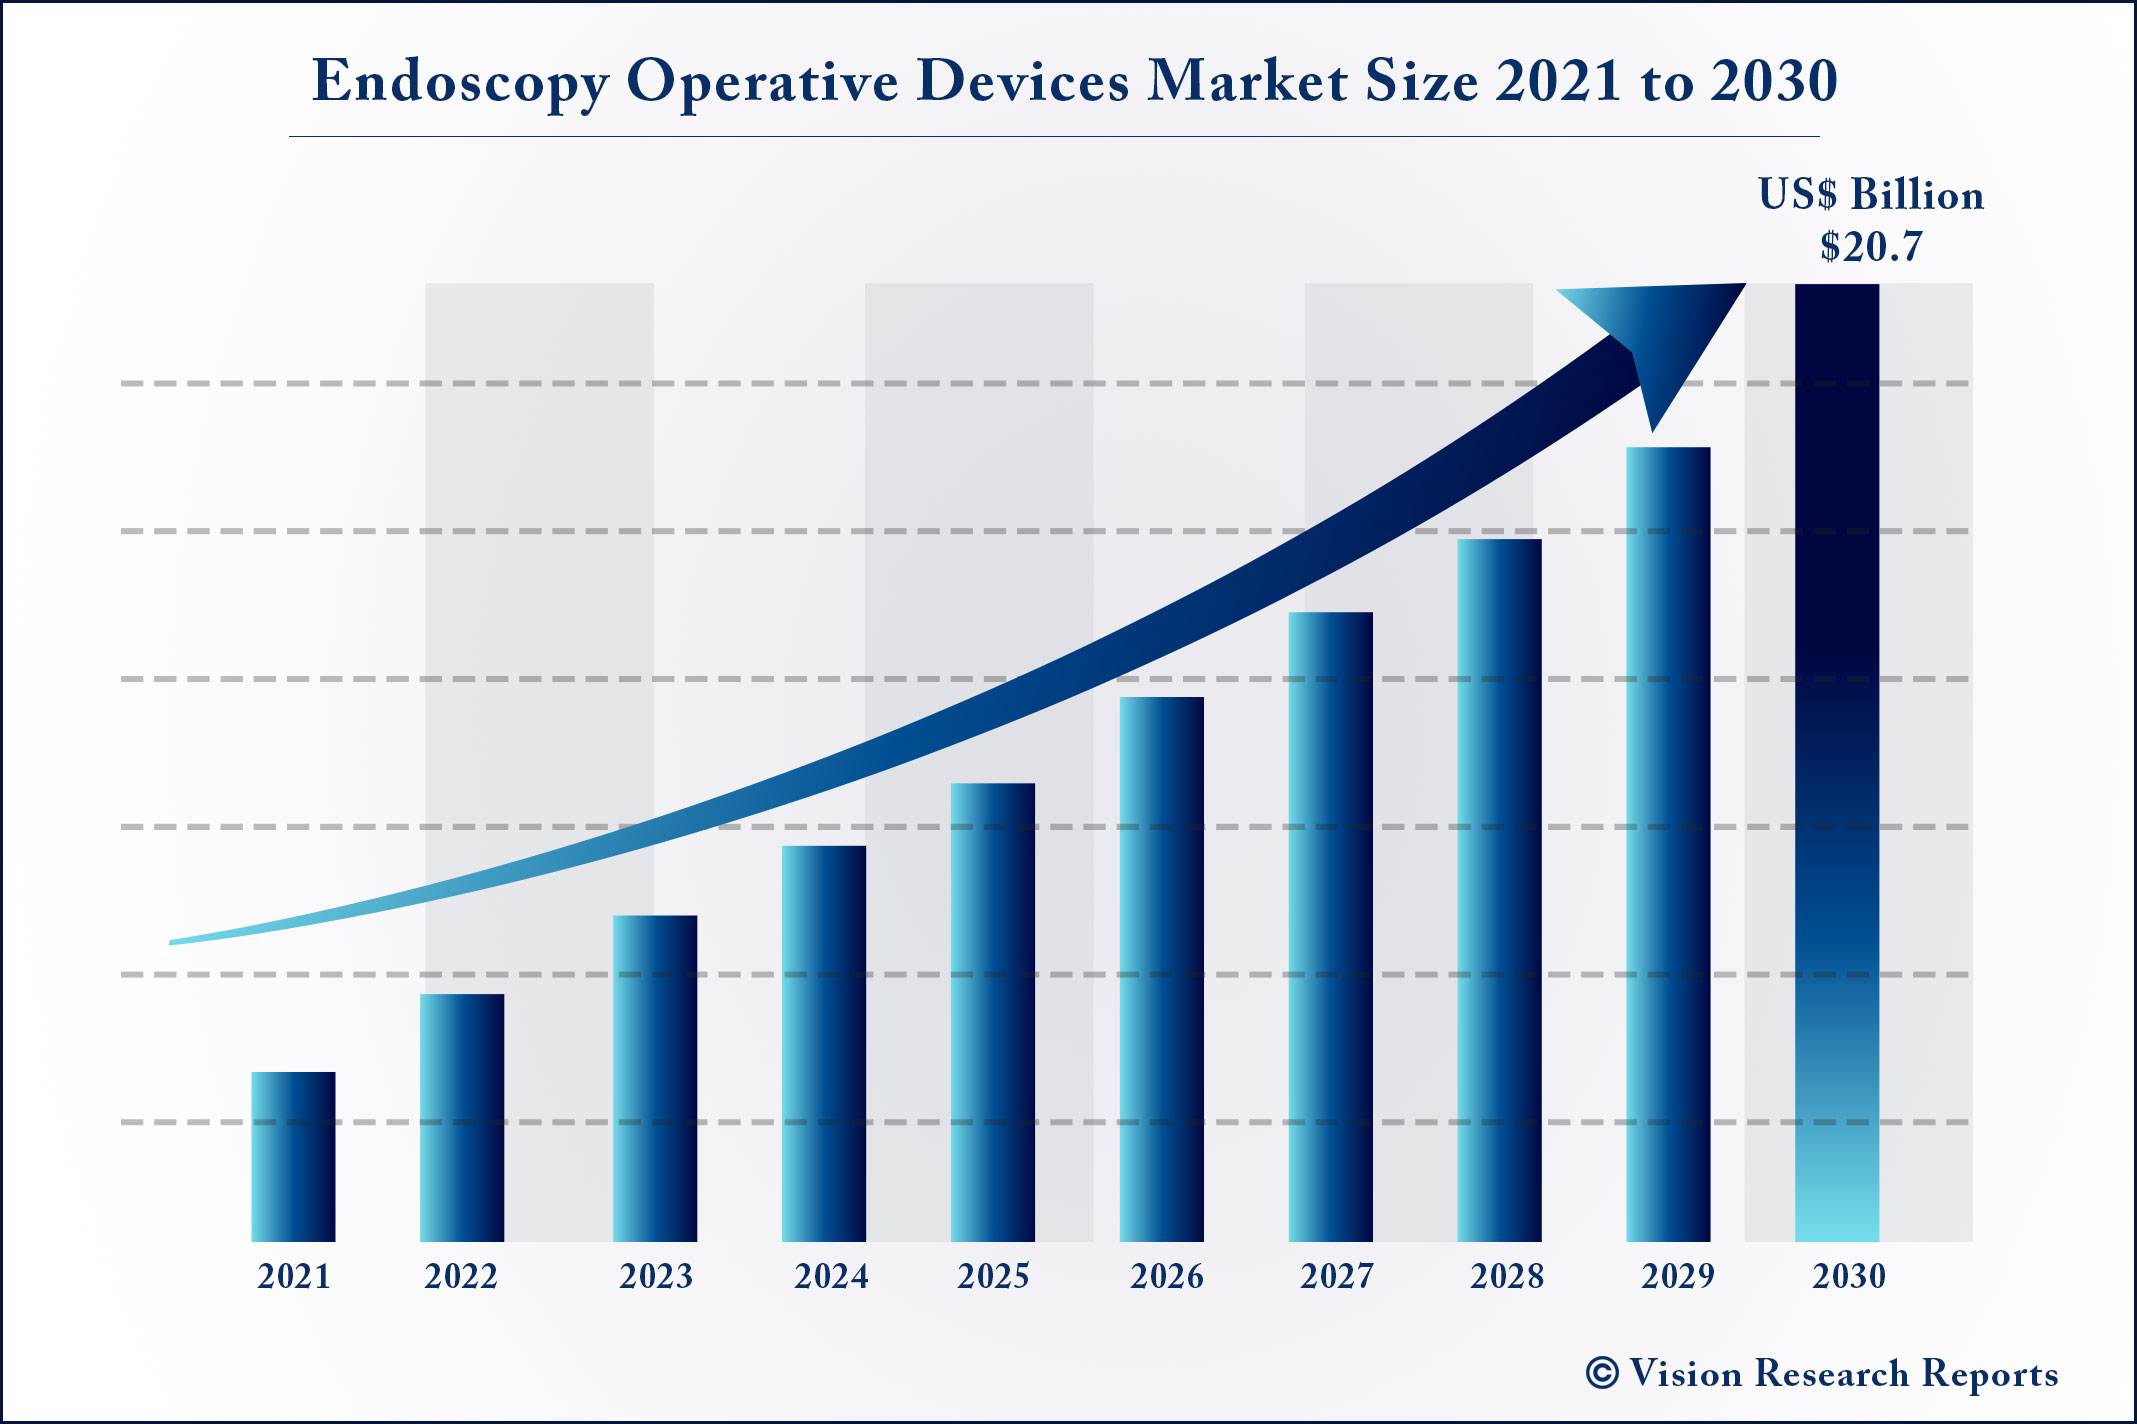 Endoscopy Operative Devices Market Size 2021 to 2030